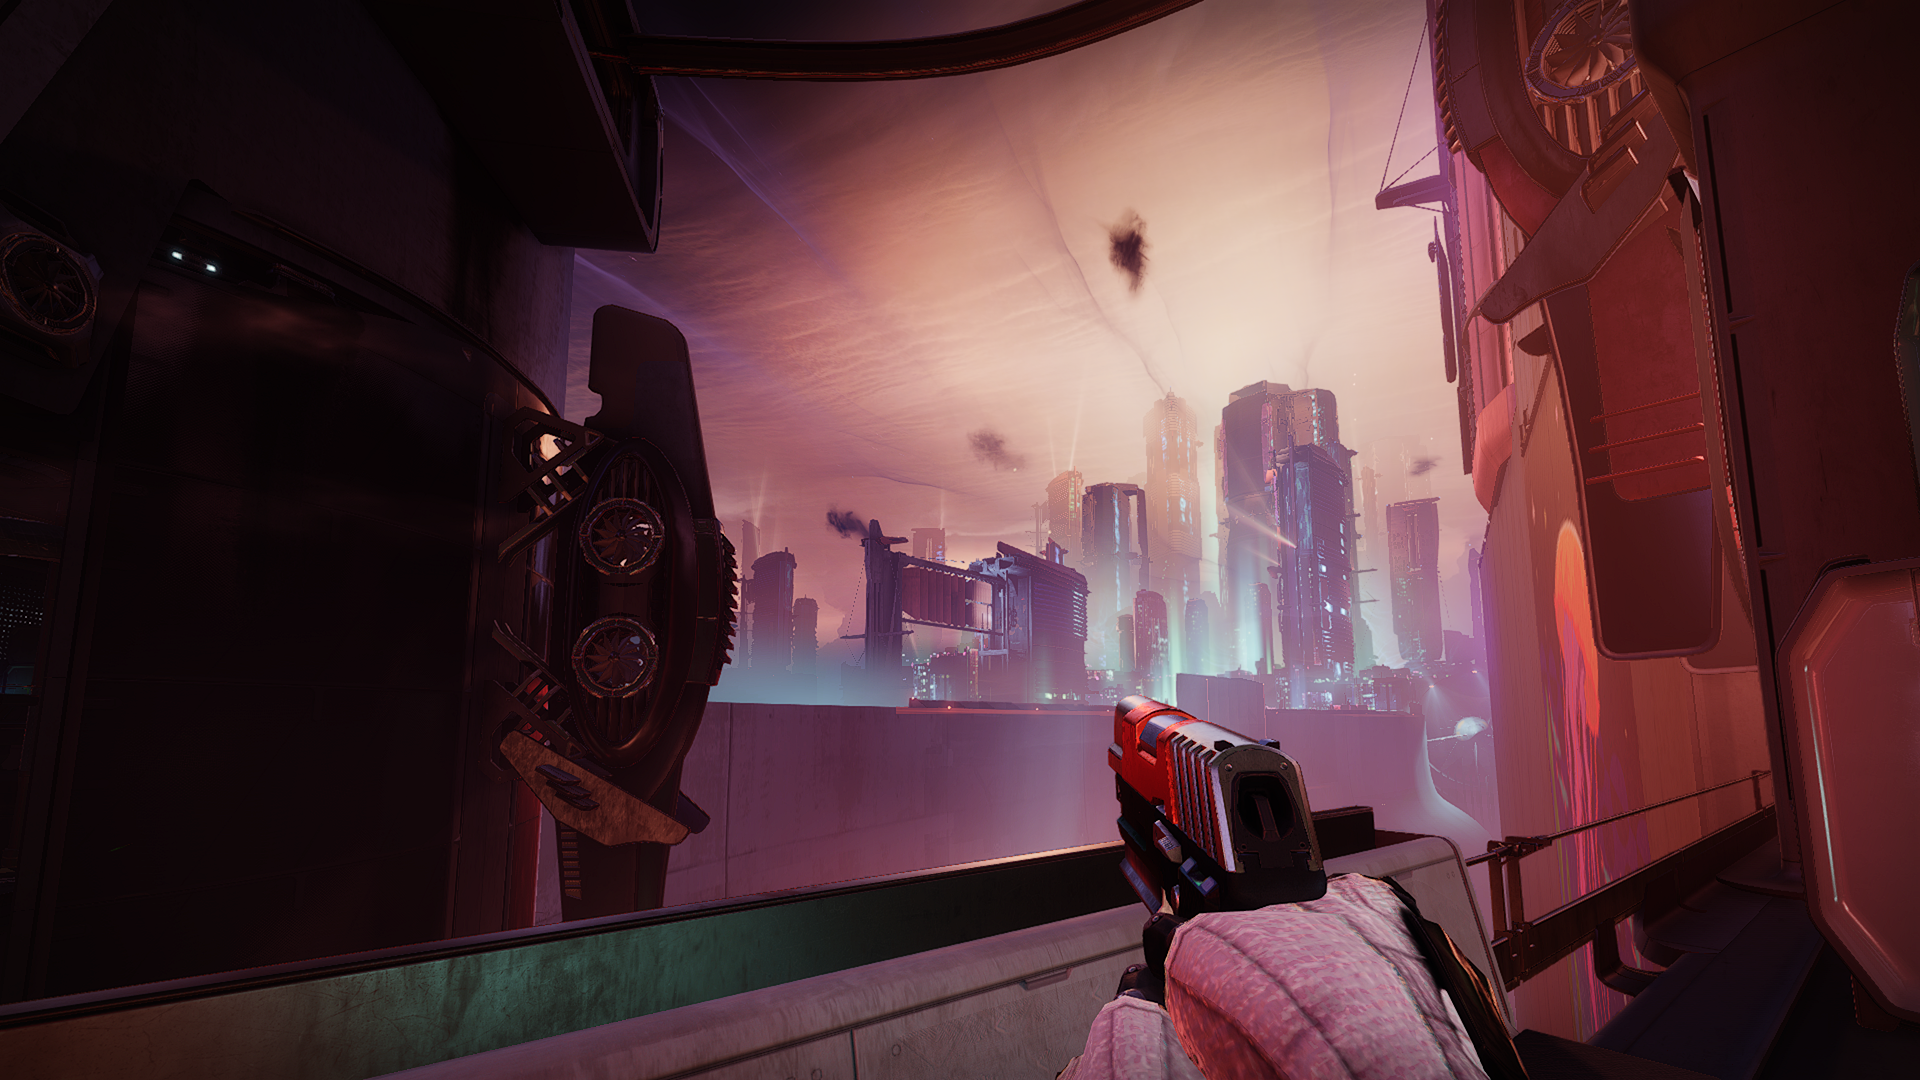 Destiny 2 Lightfall - Neomuna's impressive skybox in pink and peach